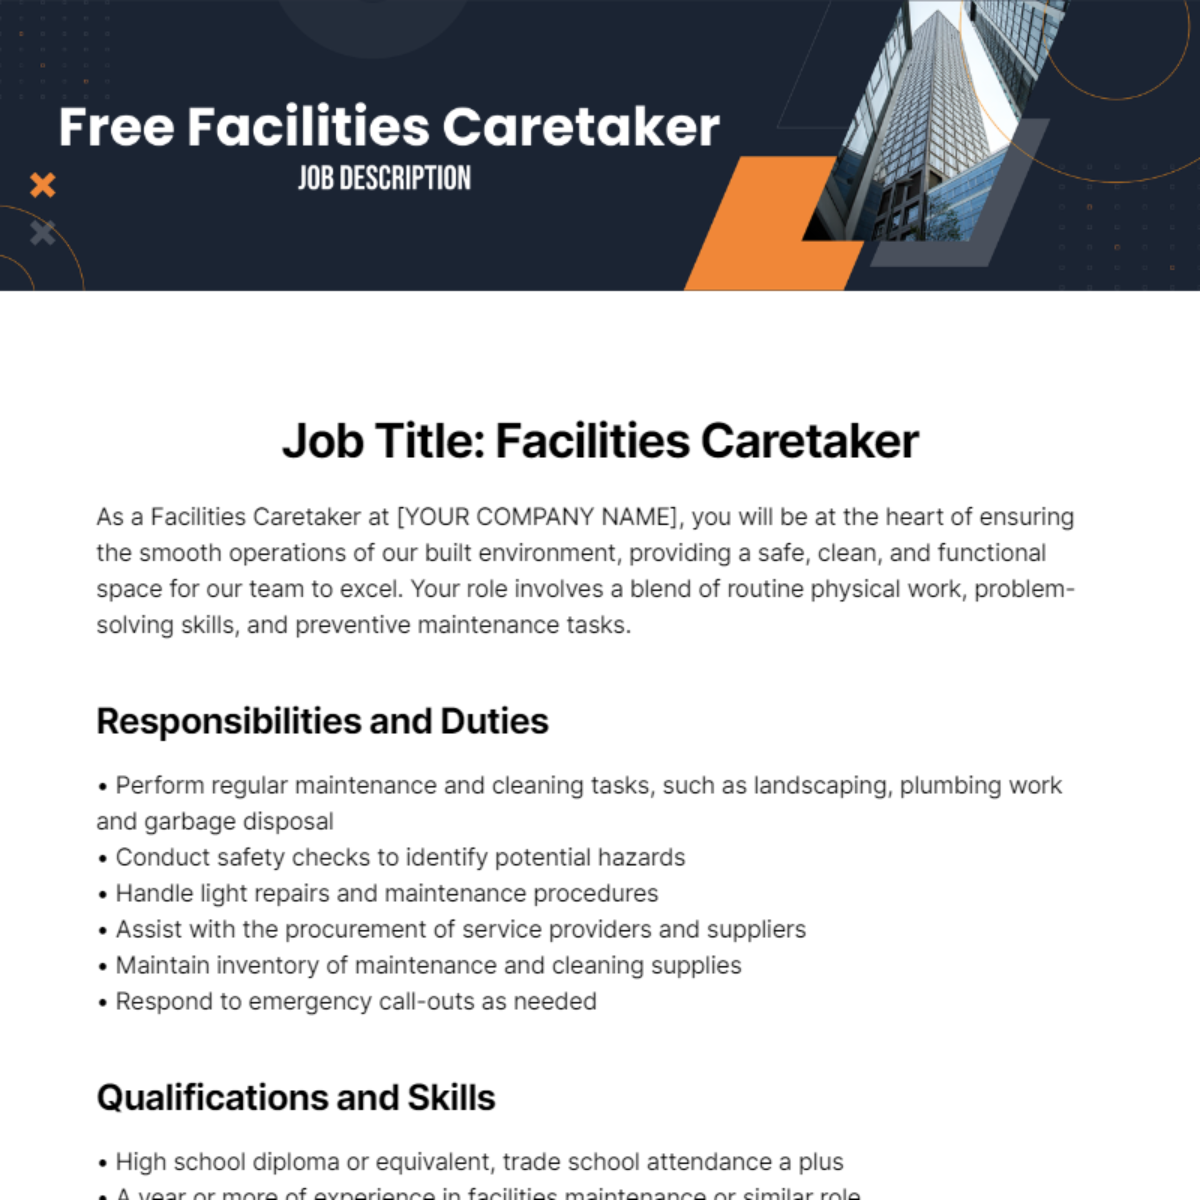 Free Facilities Caretaker Job Description Template